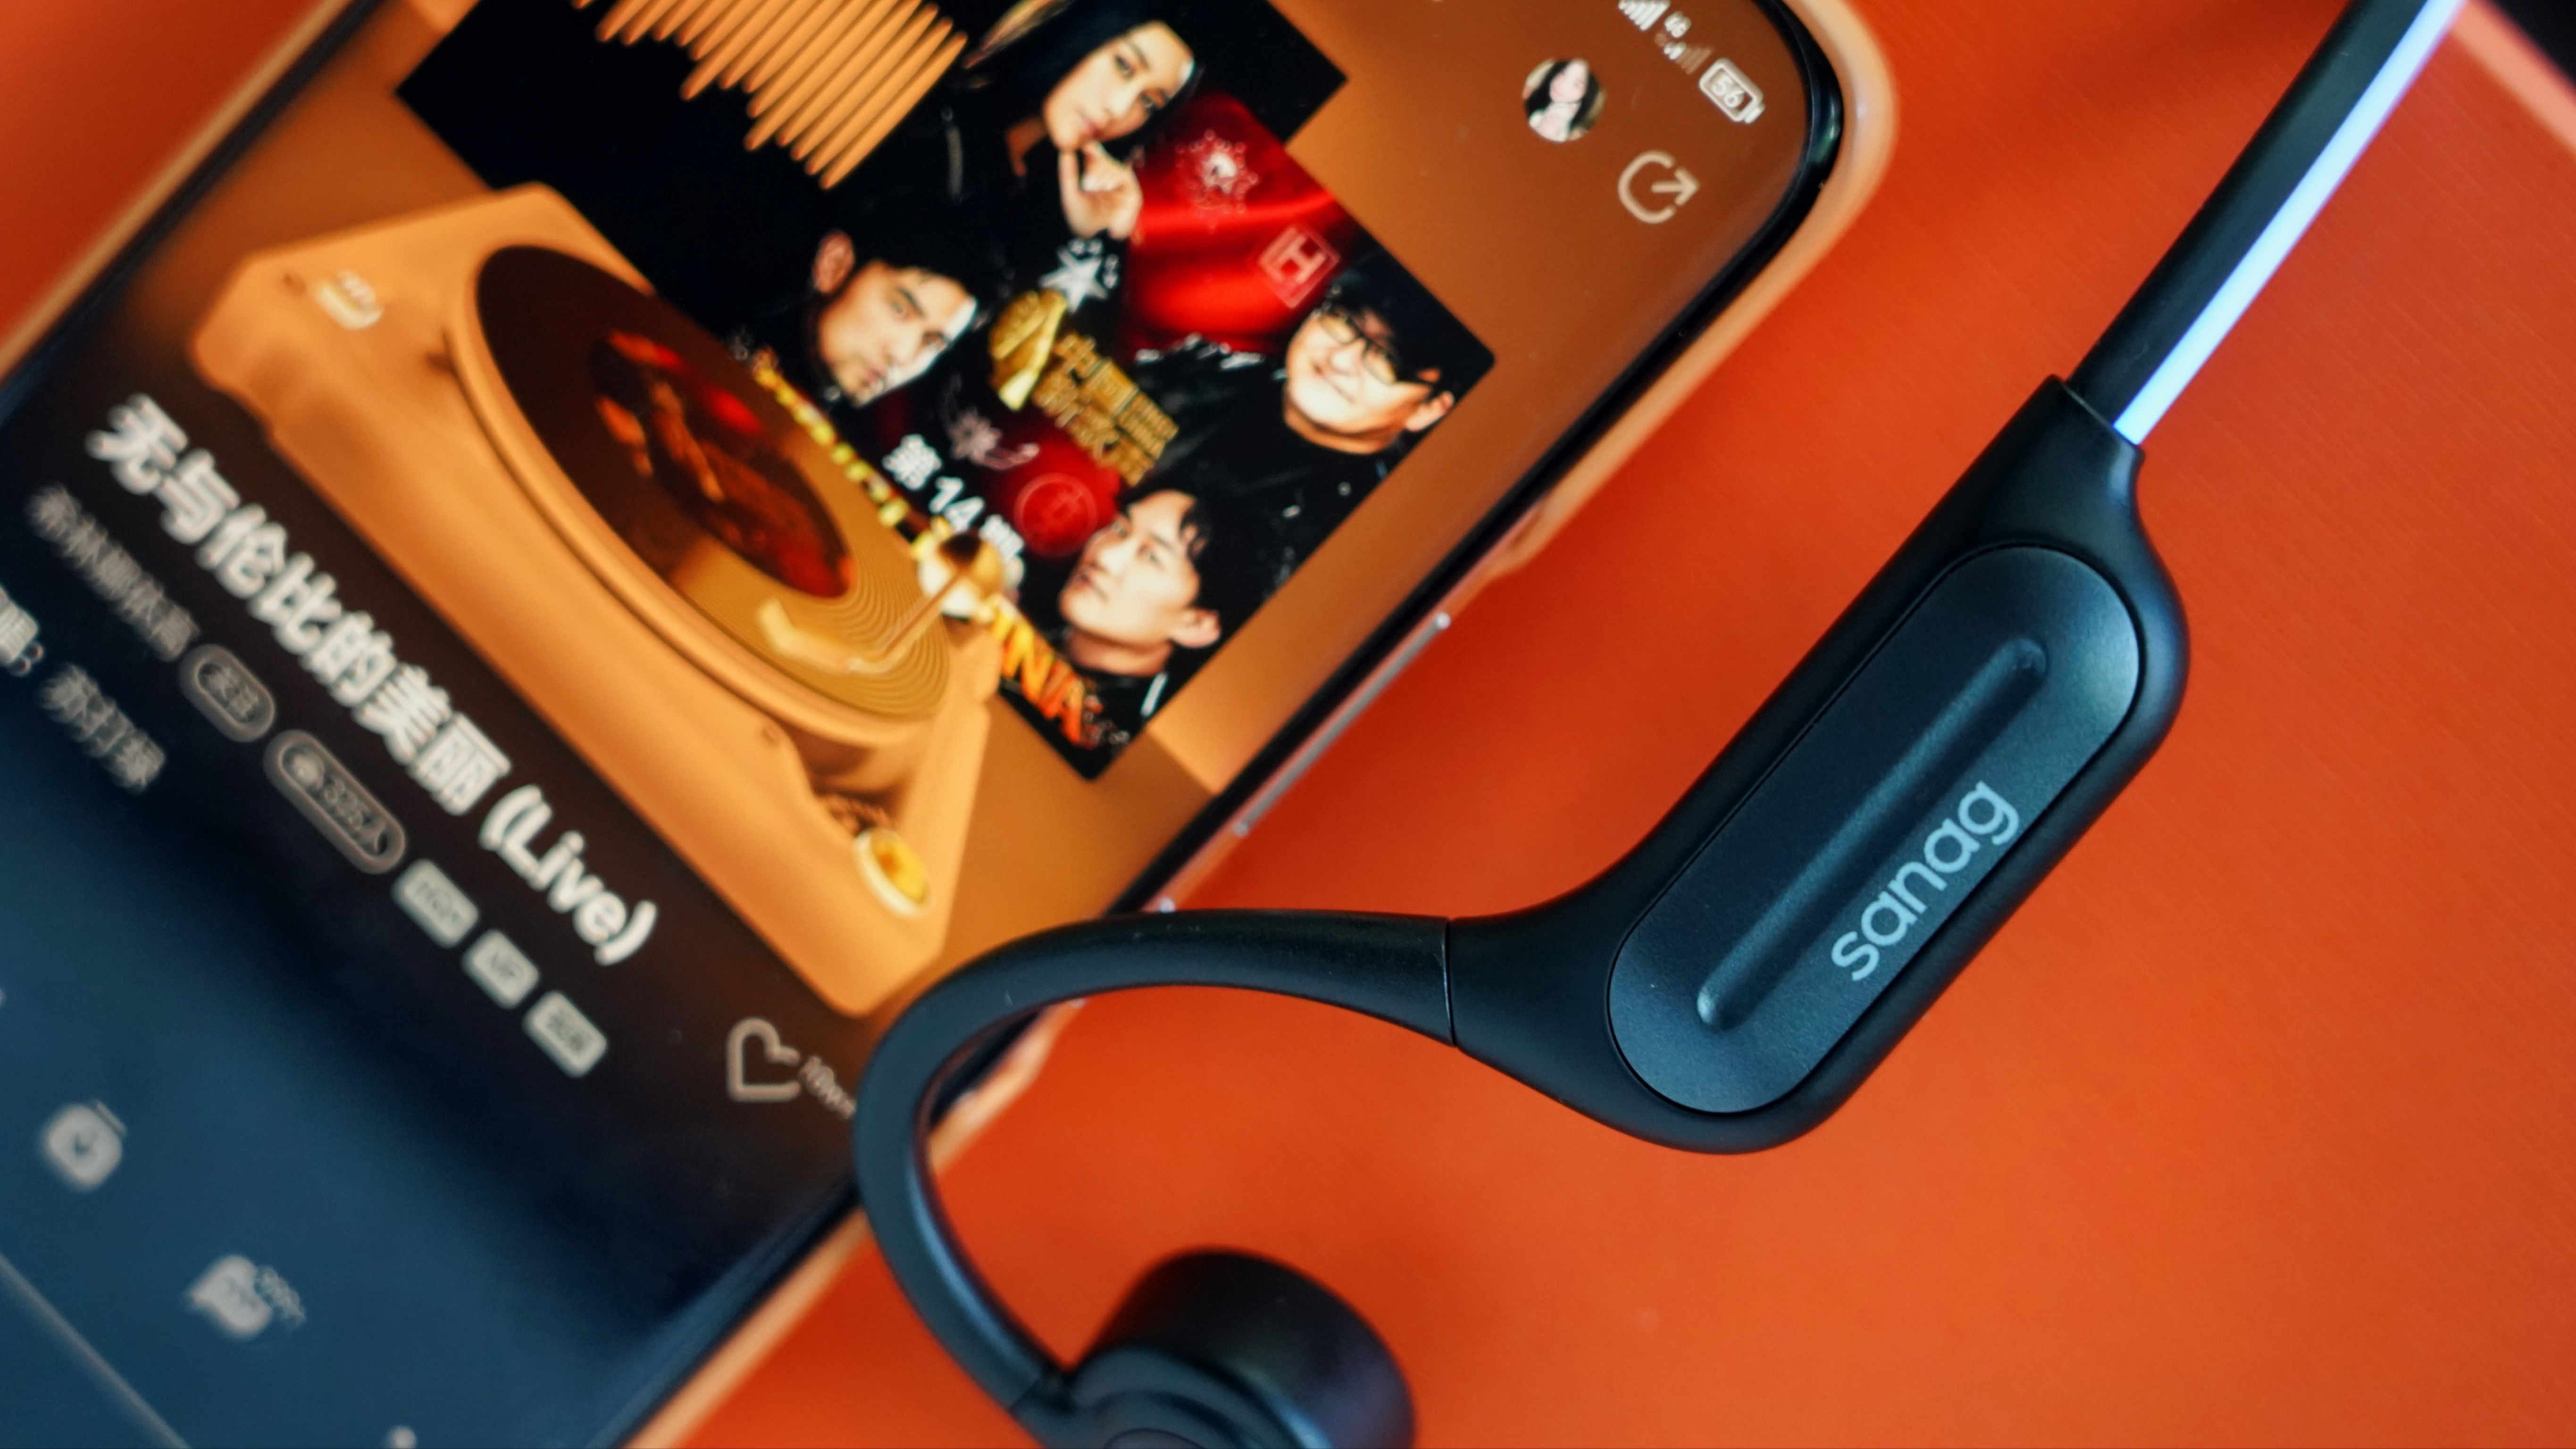 sanag塞那Z50耳夹式耳机评测：耳机就是耳饰，听歌舒适还很潮-聚超值